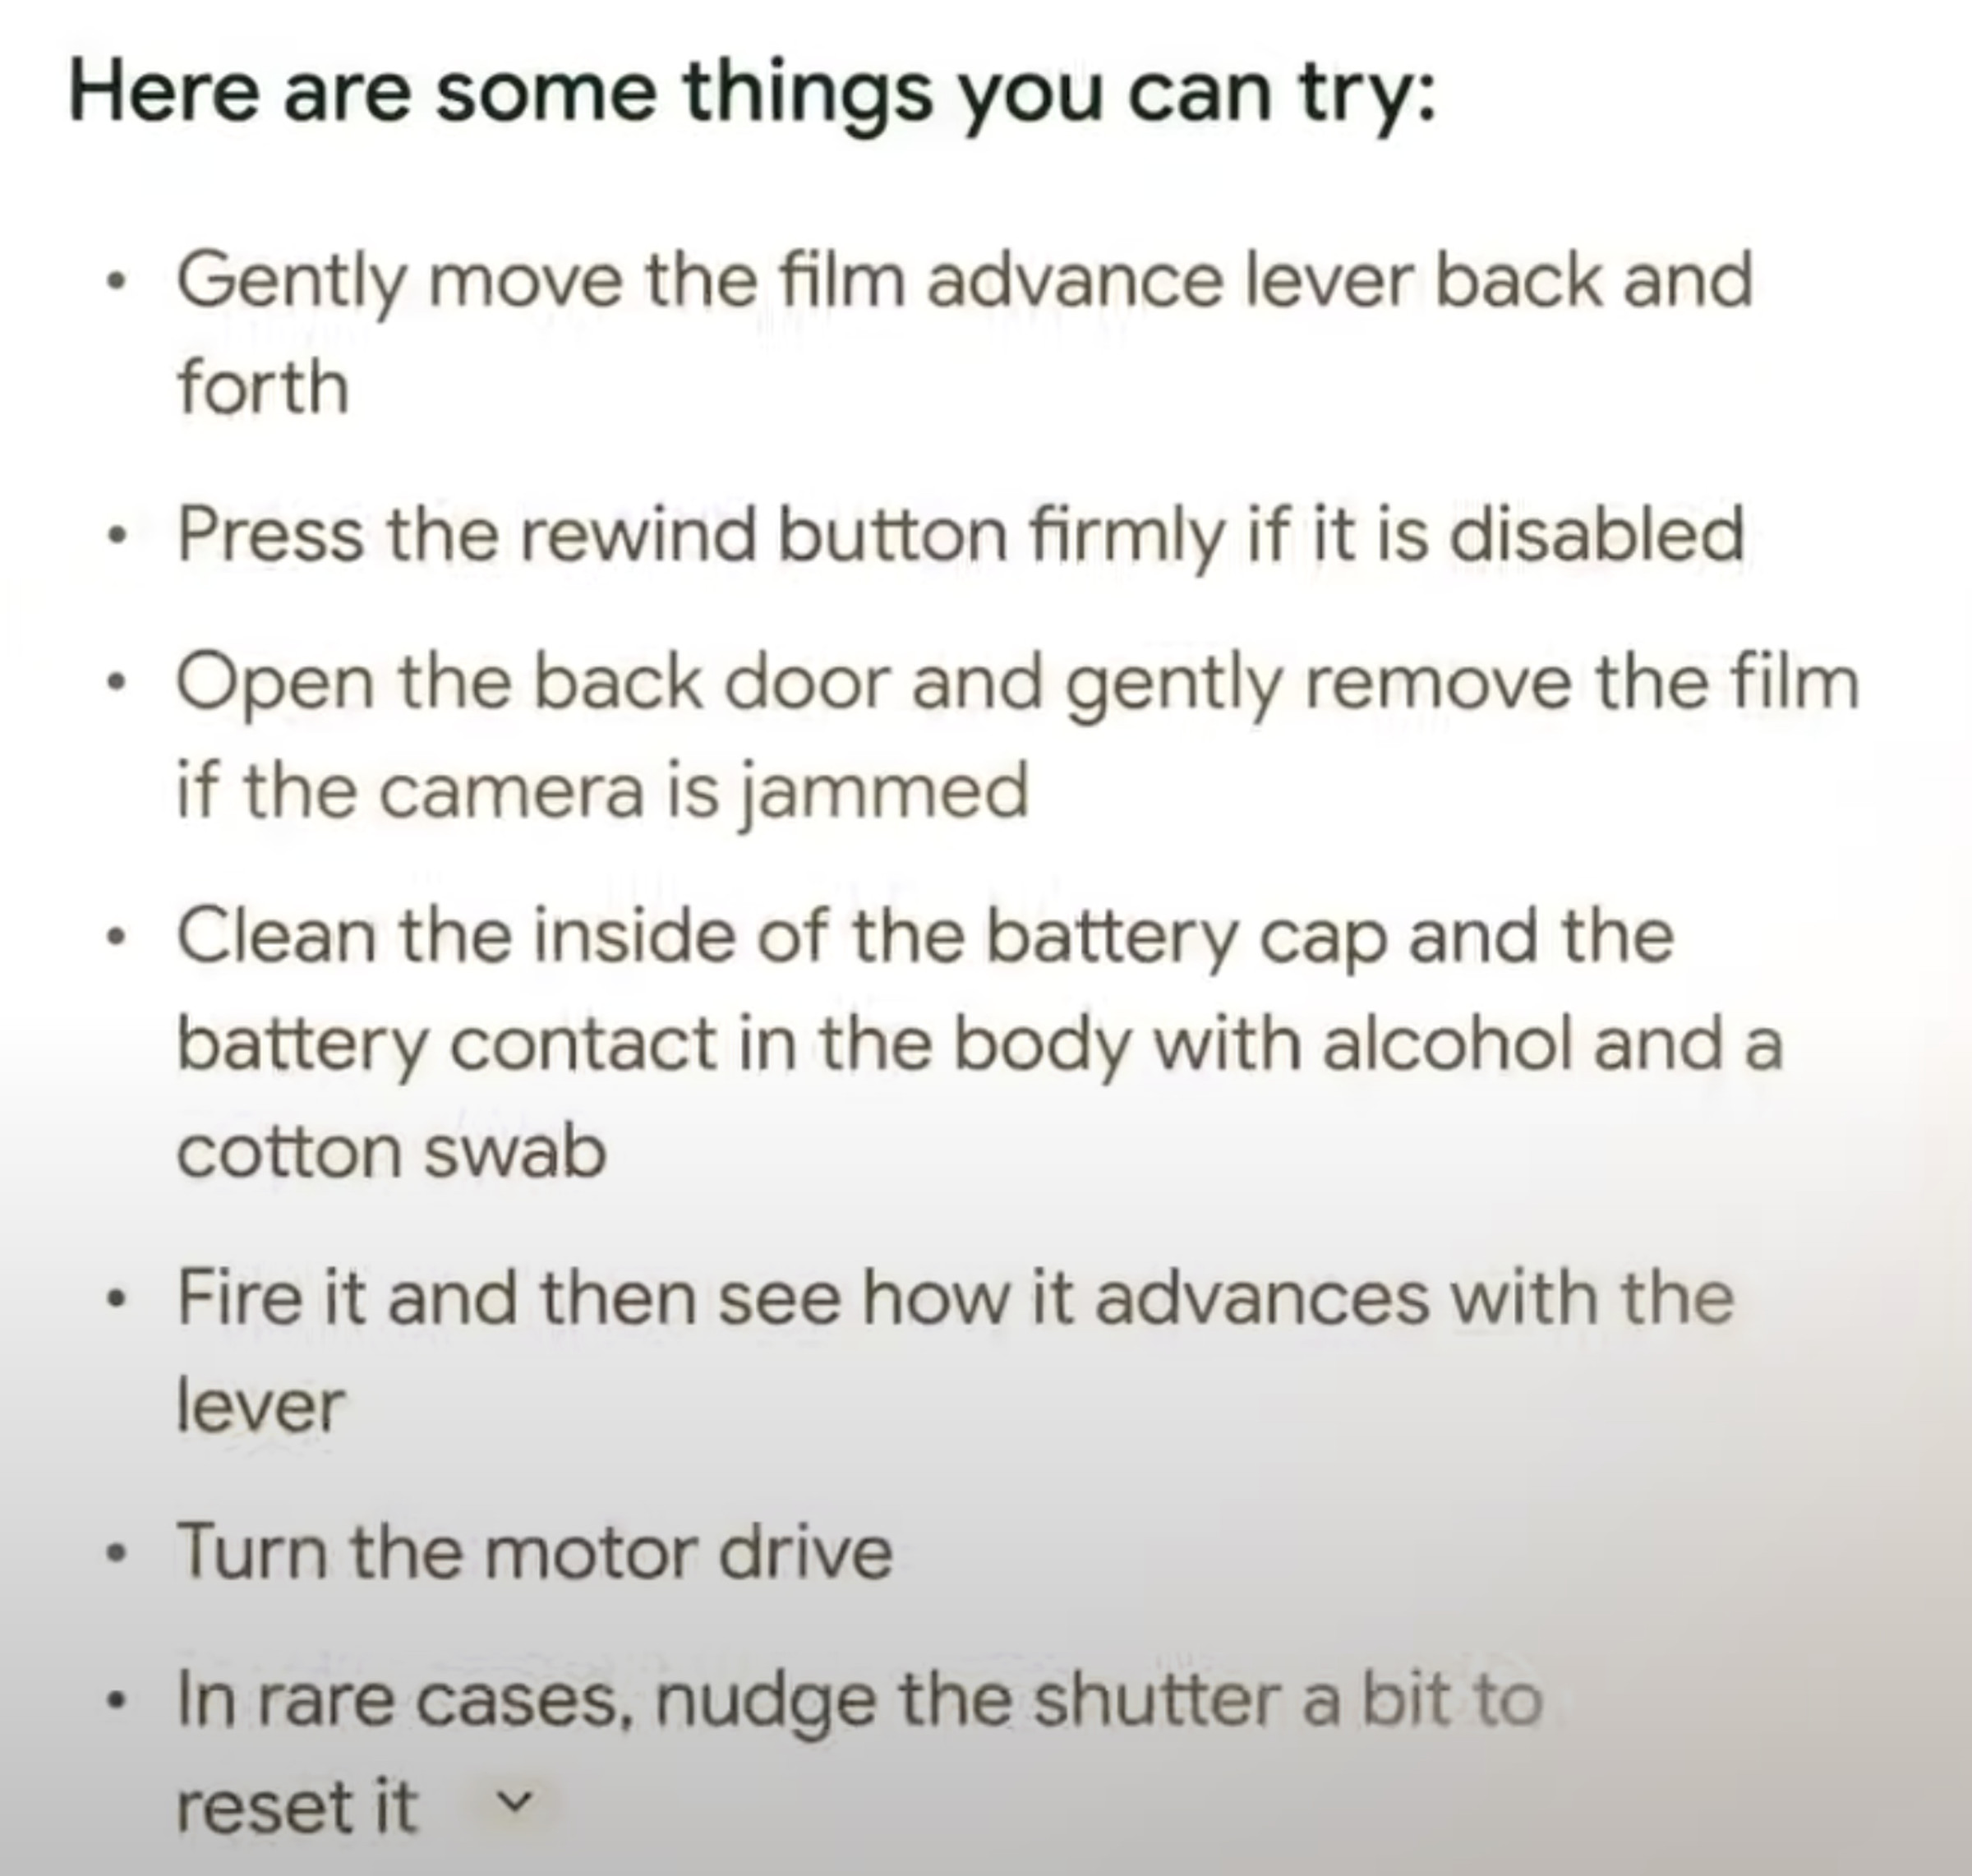 Google Gemini’s list of suggestions to fix a stuck film camera advance lever.